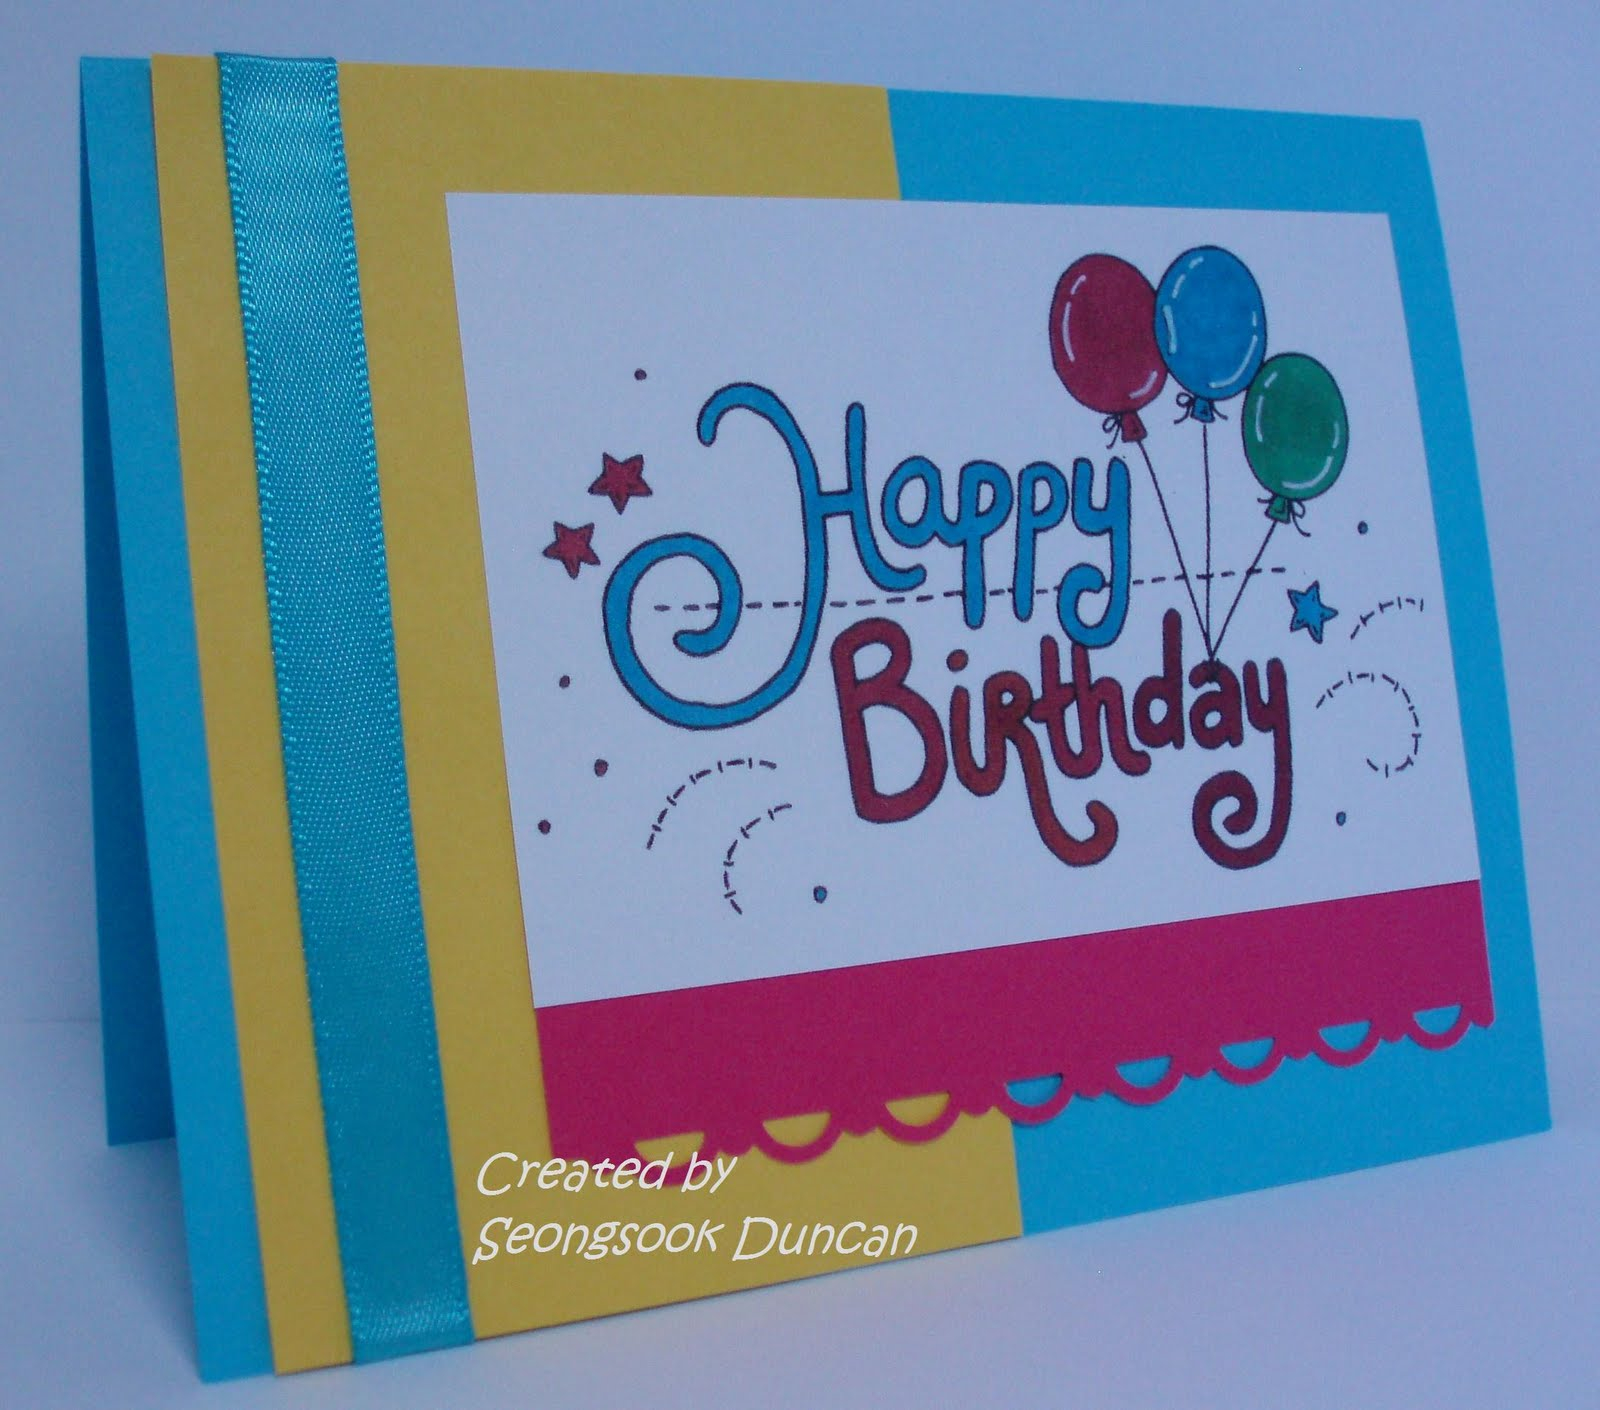 Creative Birthday Cards Ideas Birthday Ideas Unique Make A Birthday Card For Facebook Great